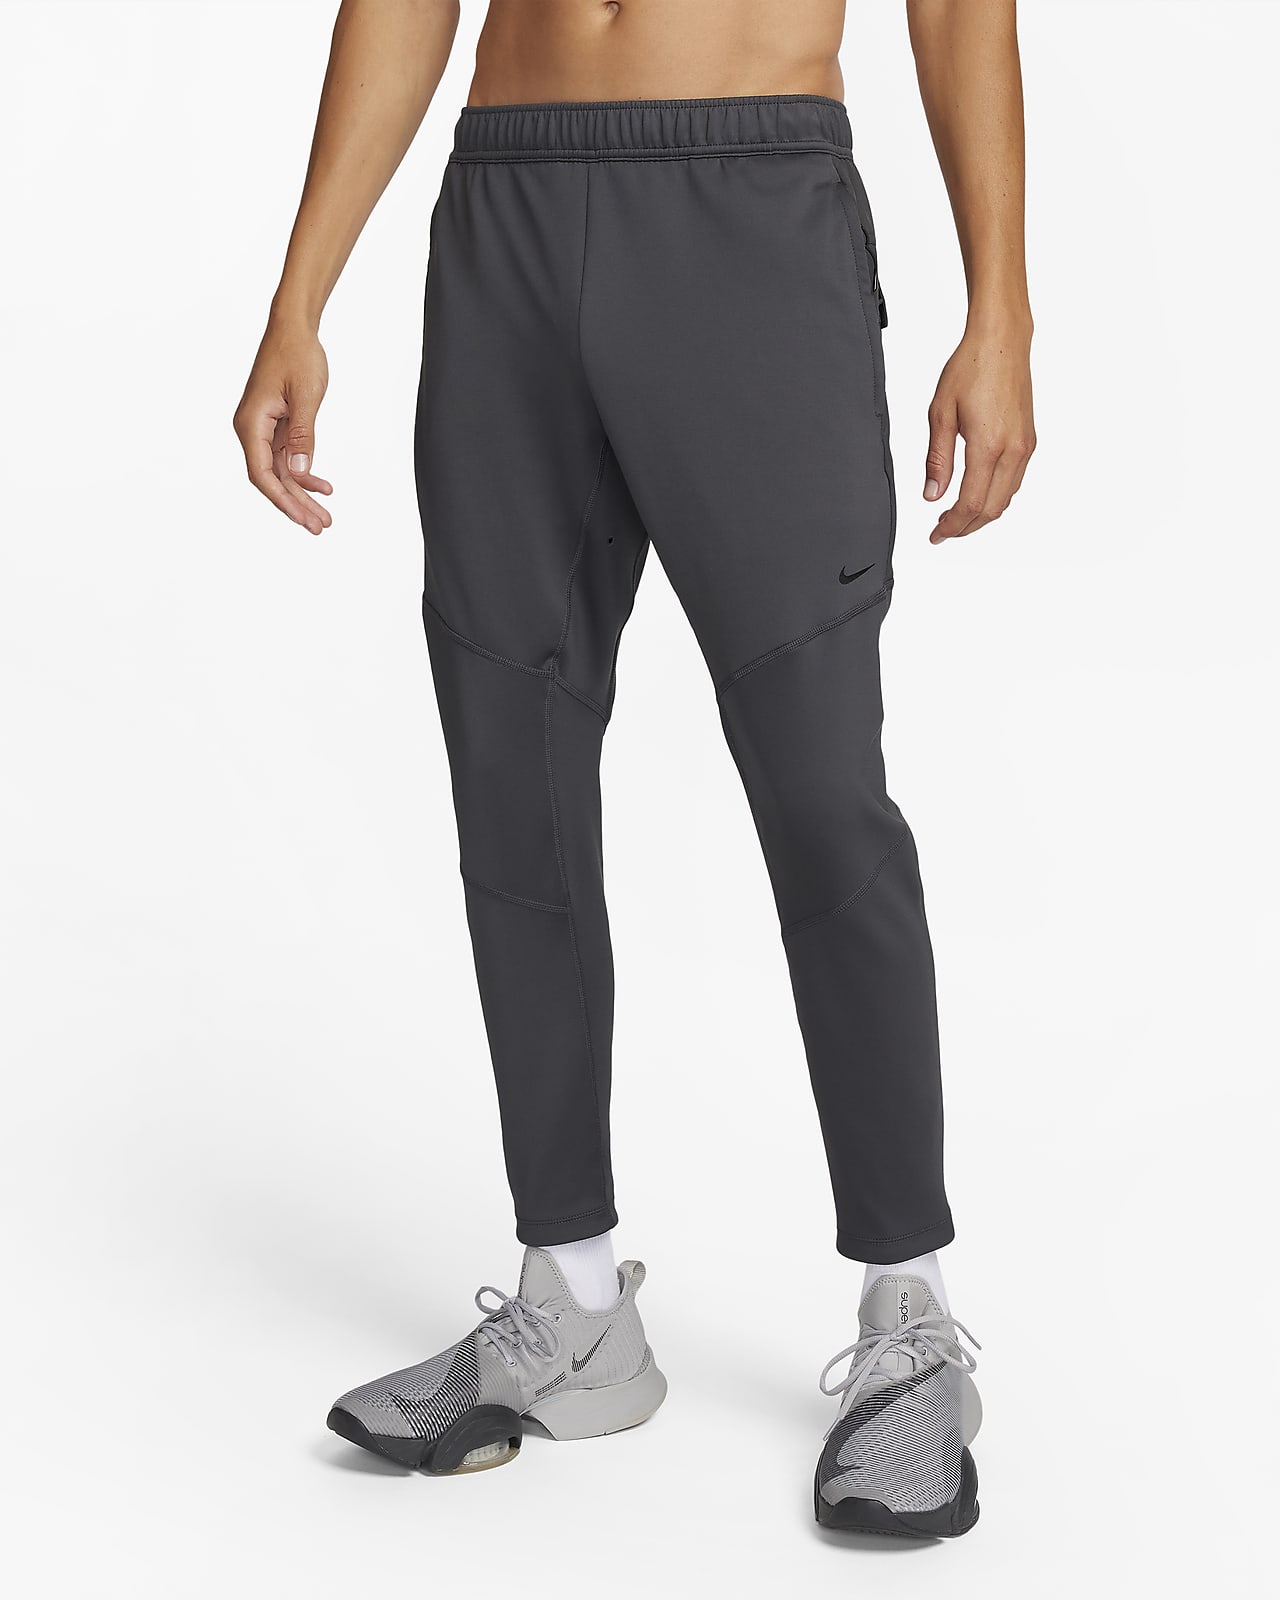 Pack de 3 Pares de Meias Sportswear Everyday Essential · Nike · El Corte  Inglés